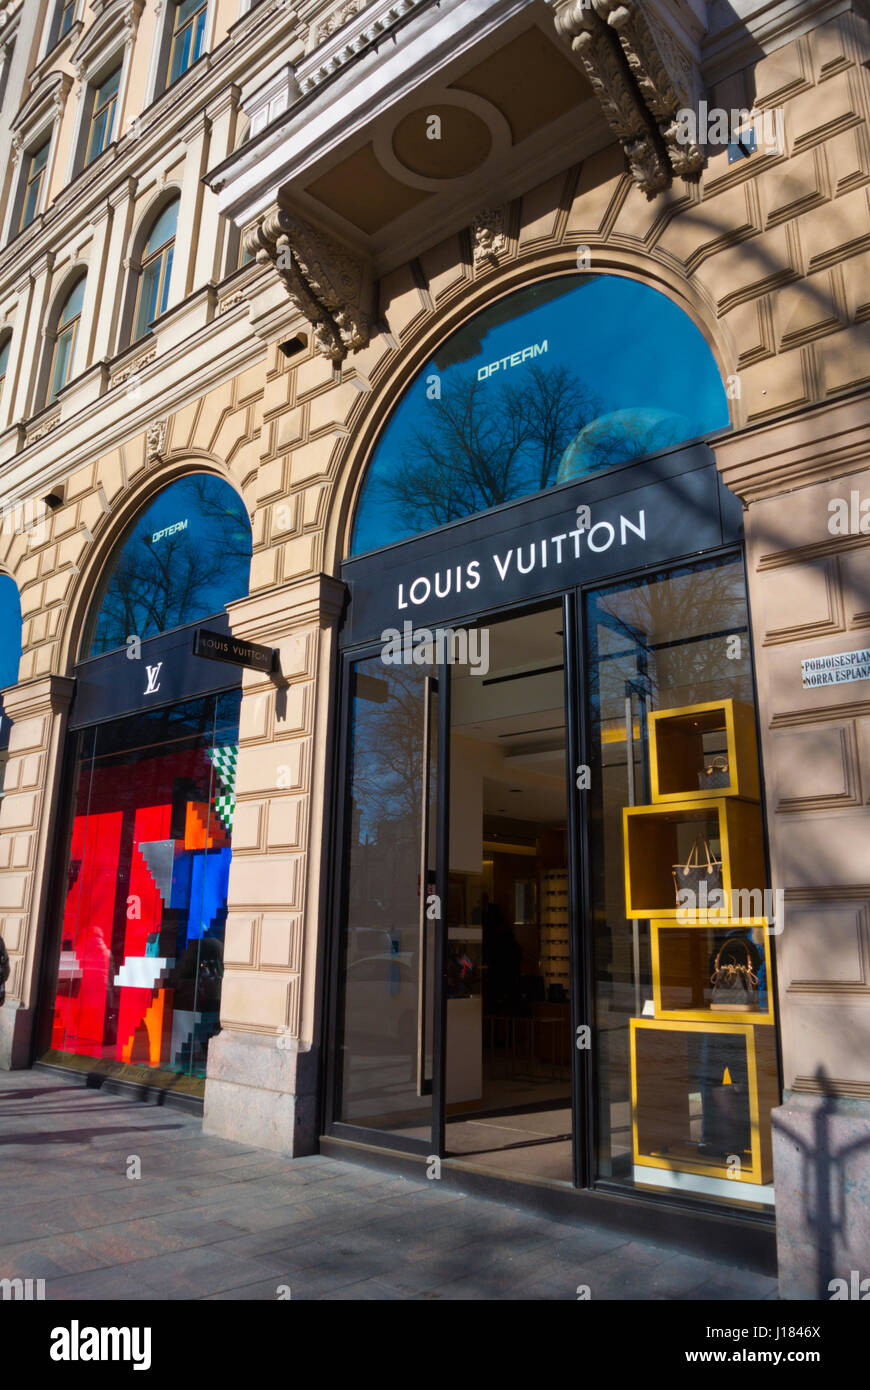 Louis Vuitton shop, Pohjoisesplanadi, esplanade street, Helsinki